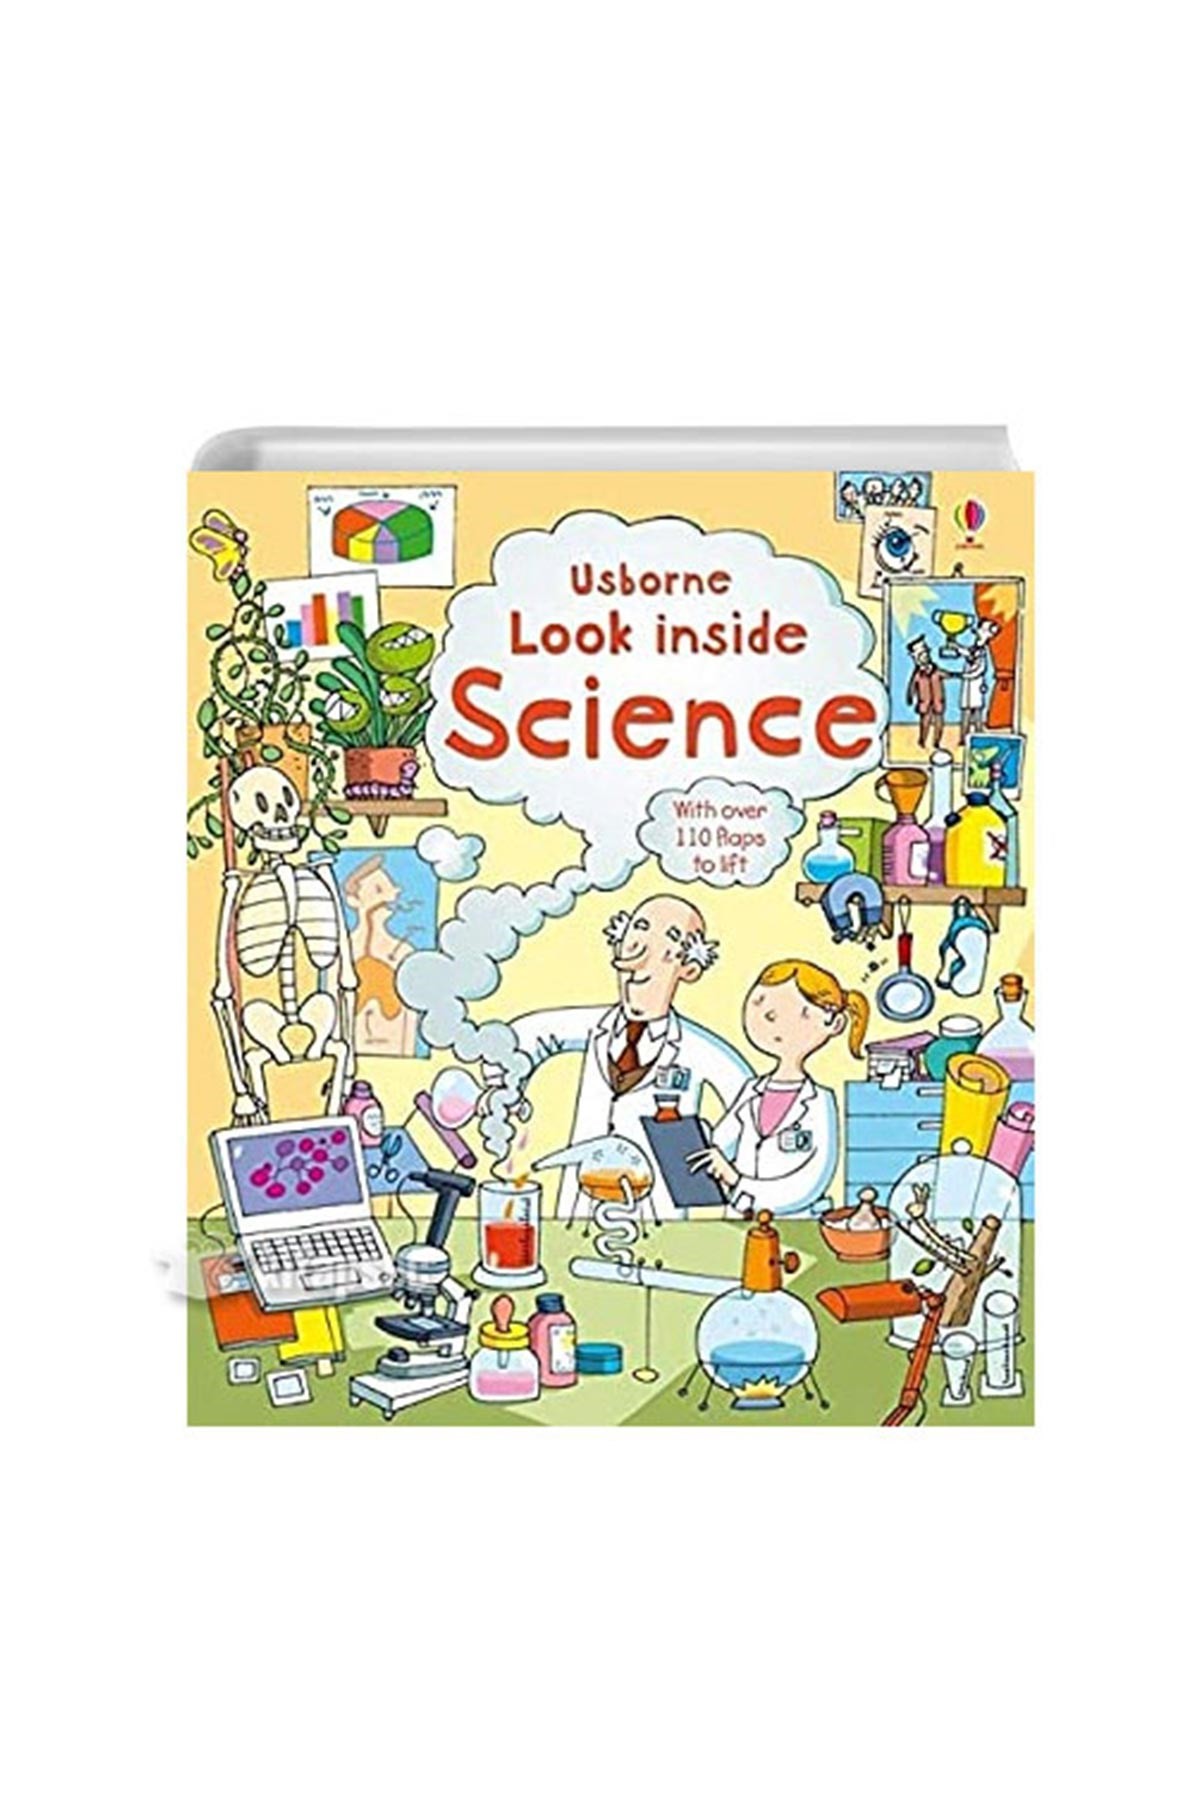 The Usborne Look Inside Science